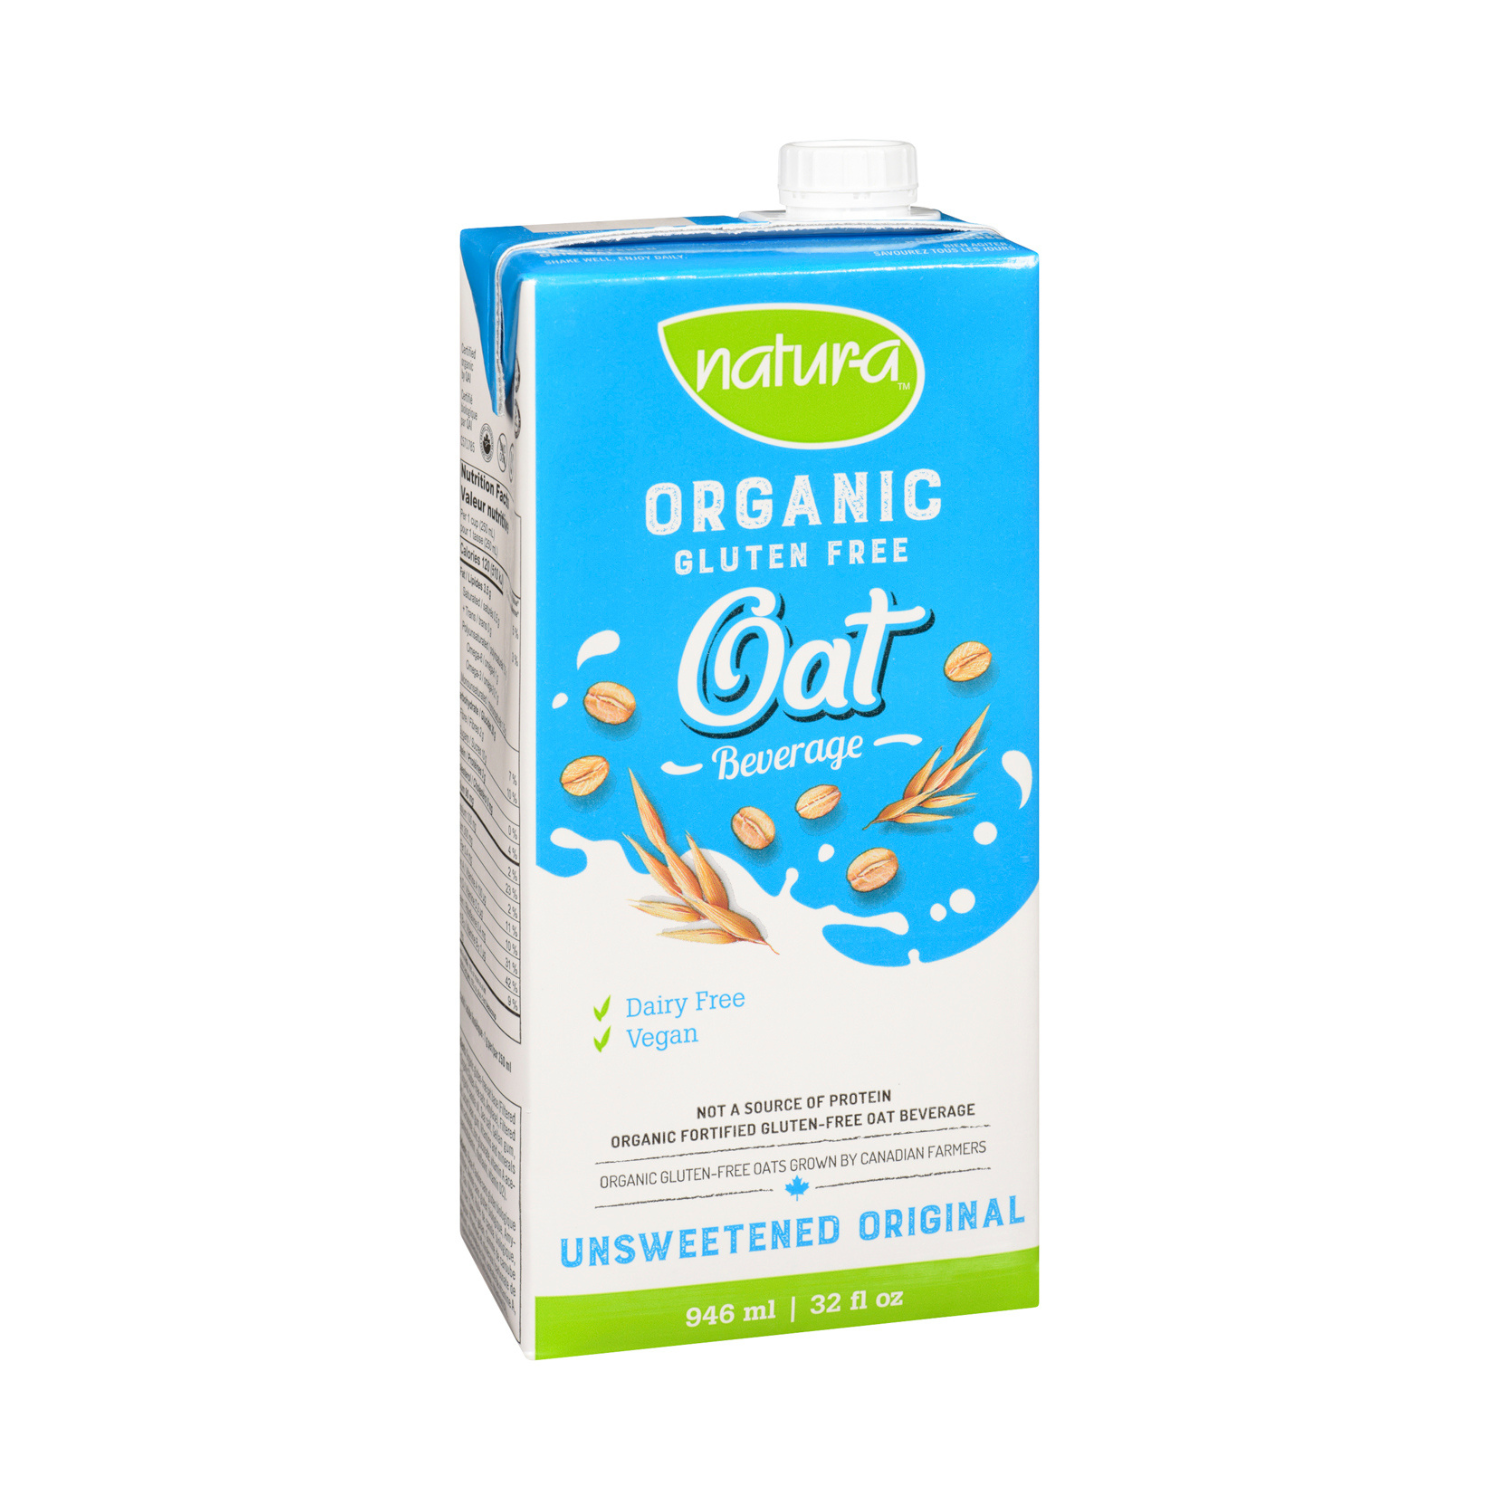 Natur-a Oat Beverage - Original Unsweetened (Organic), 946 ml. [Exp: 17/06/23]